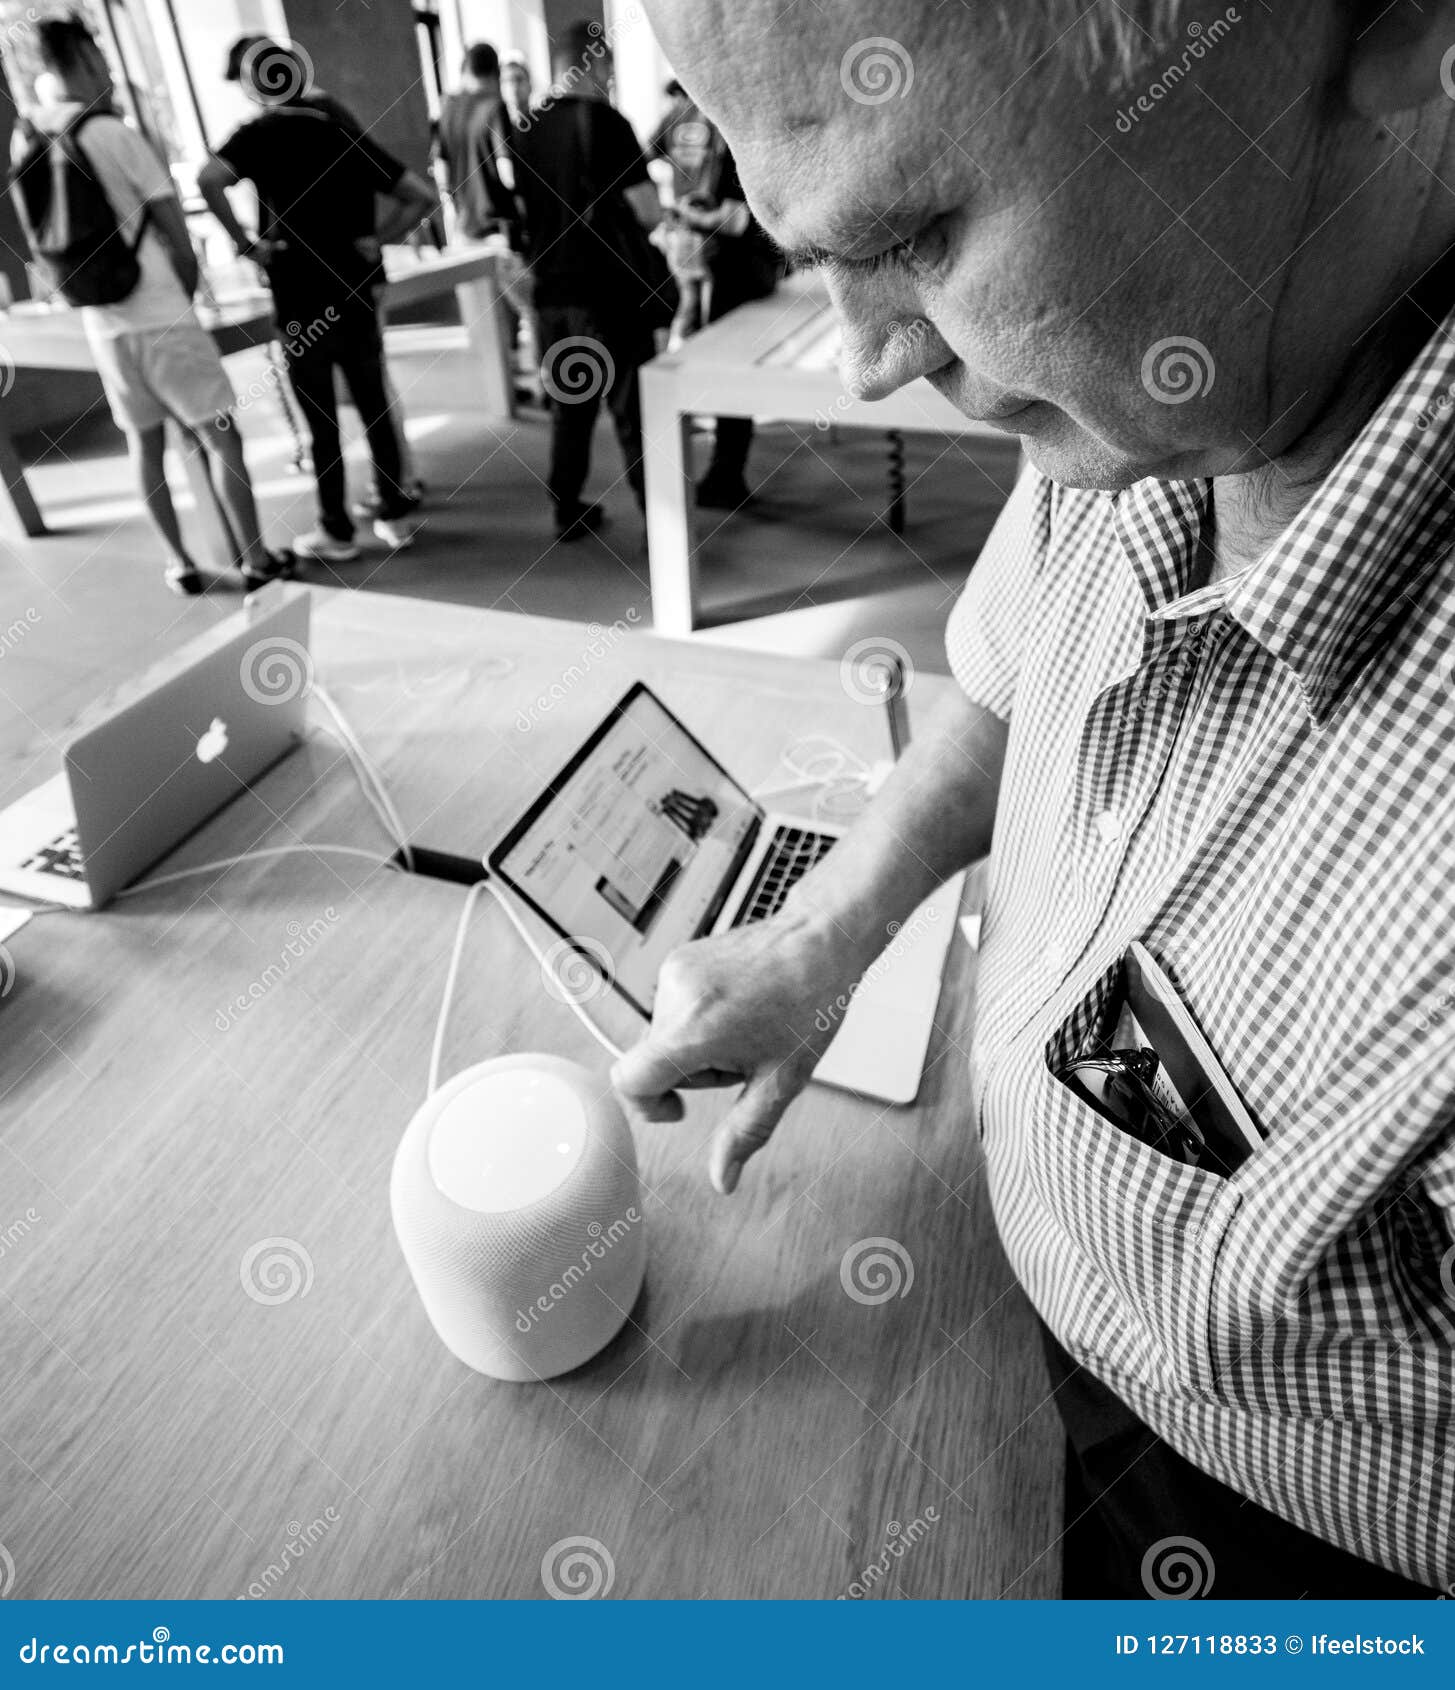 senior-man-apple-store-testing-homepod-speaker-siri-strasbourg-france-sep-curious-smart-iphone-xs-max-127118833.jpg